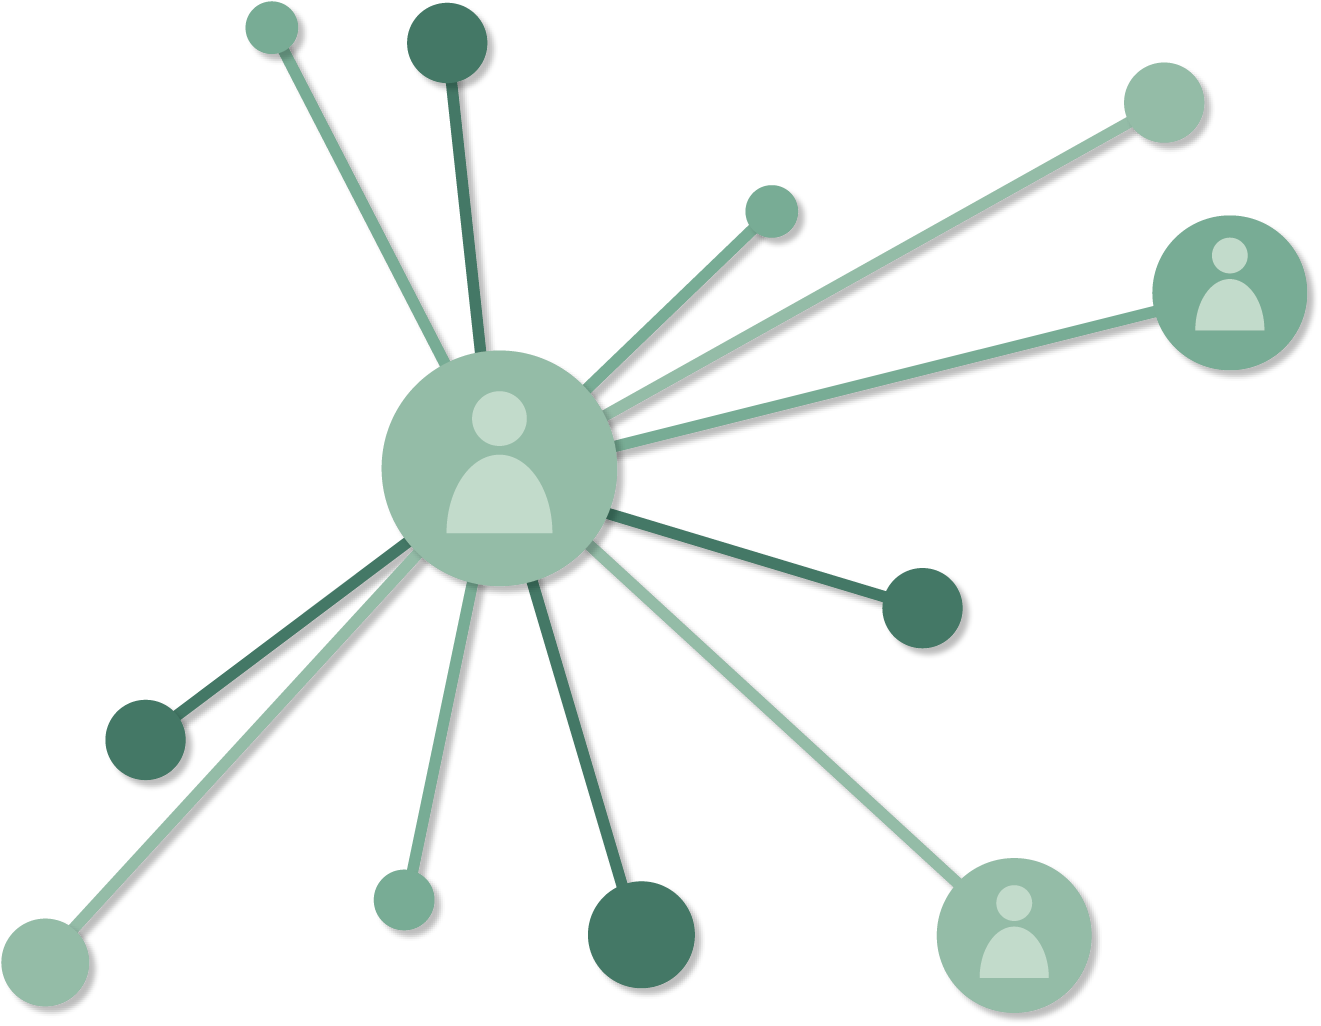 Green networking illustration